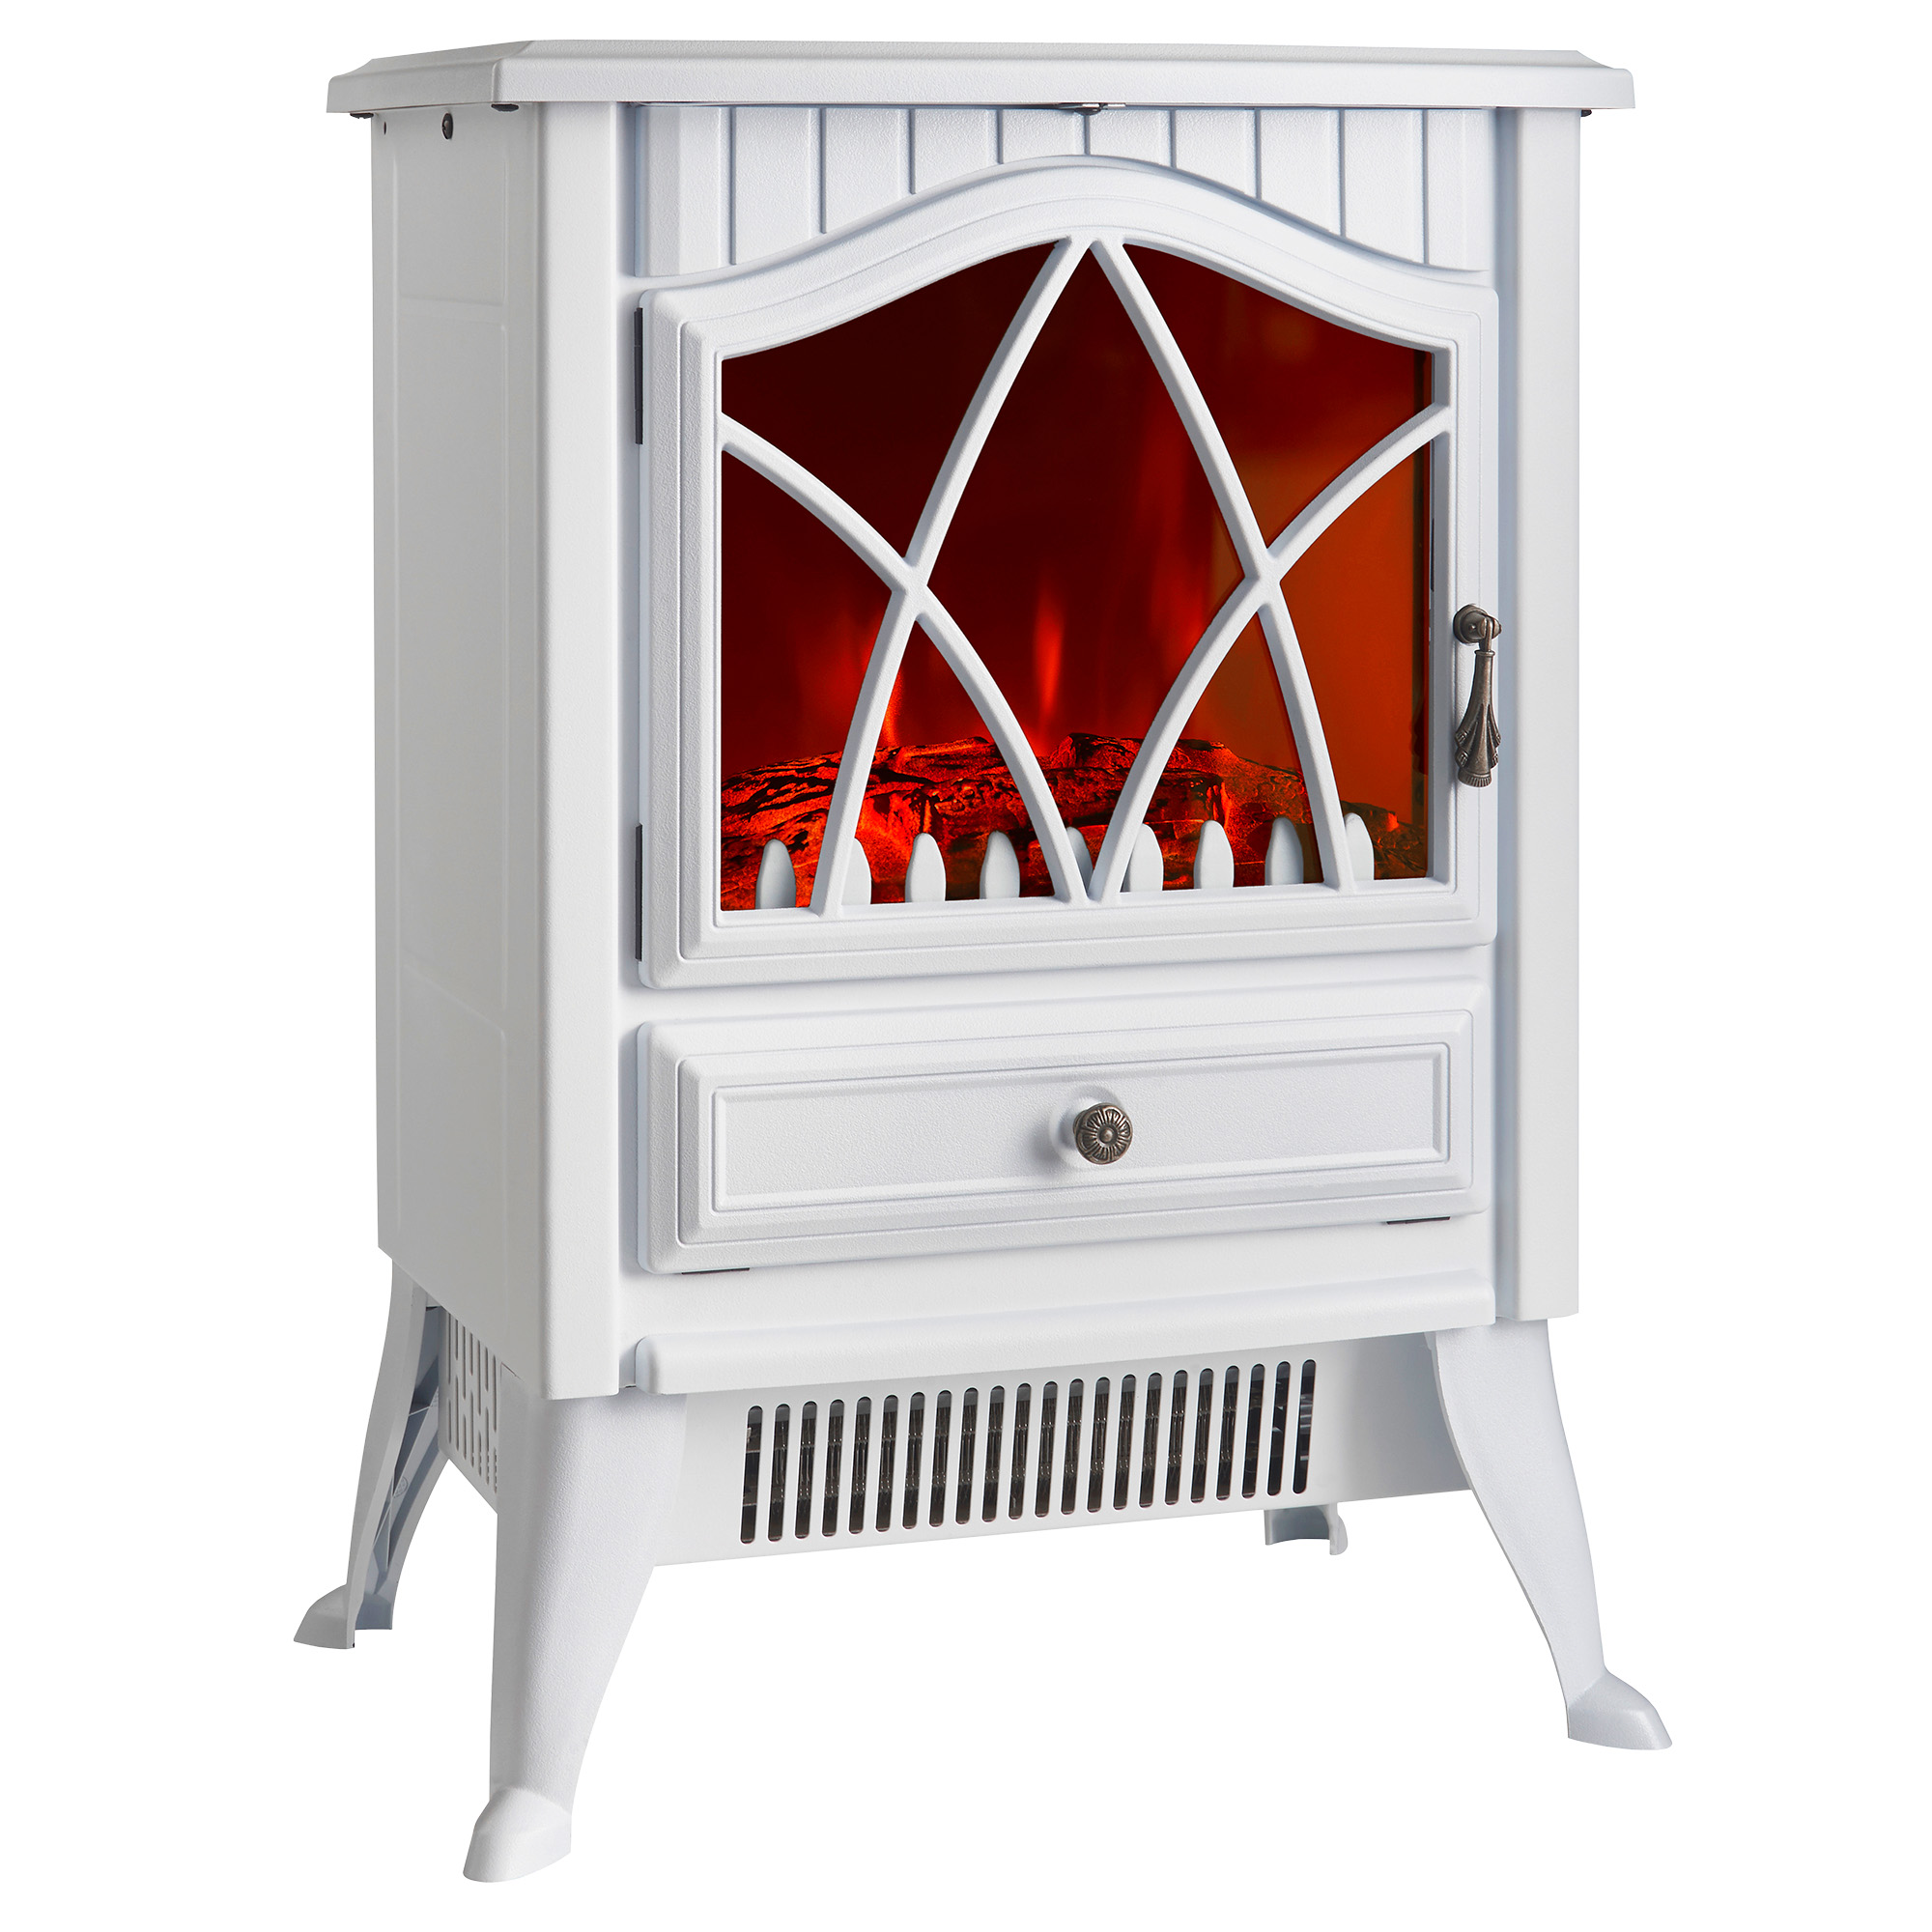 VonHaus Electric Stove Heater 1850W Indoor Fireplace Log/Wood Burner LED Flame